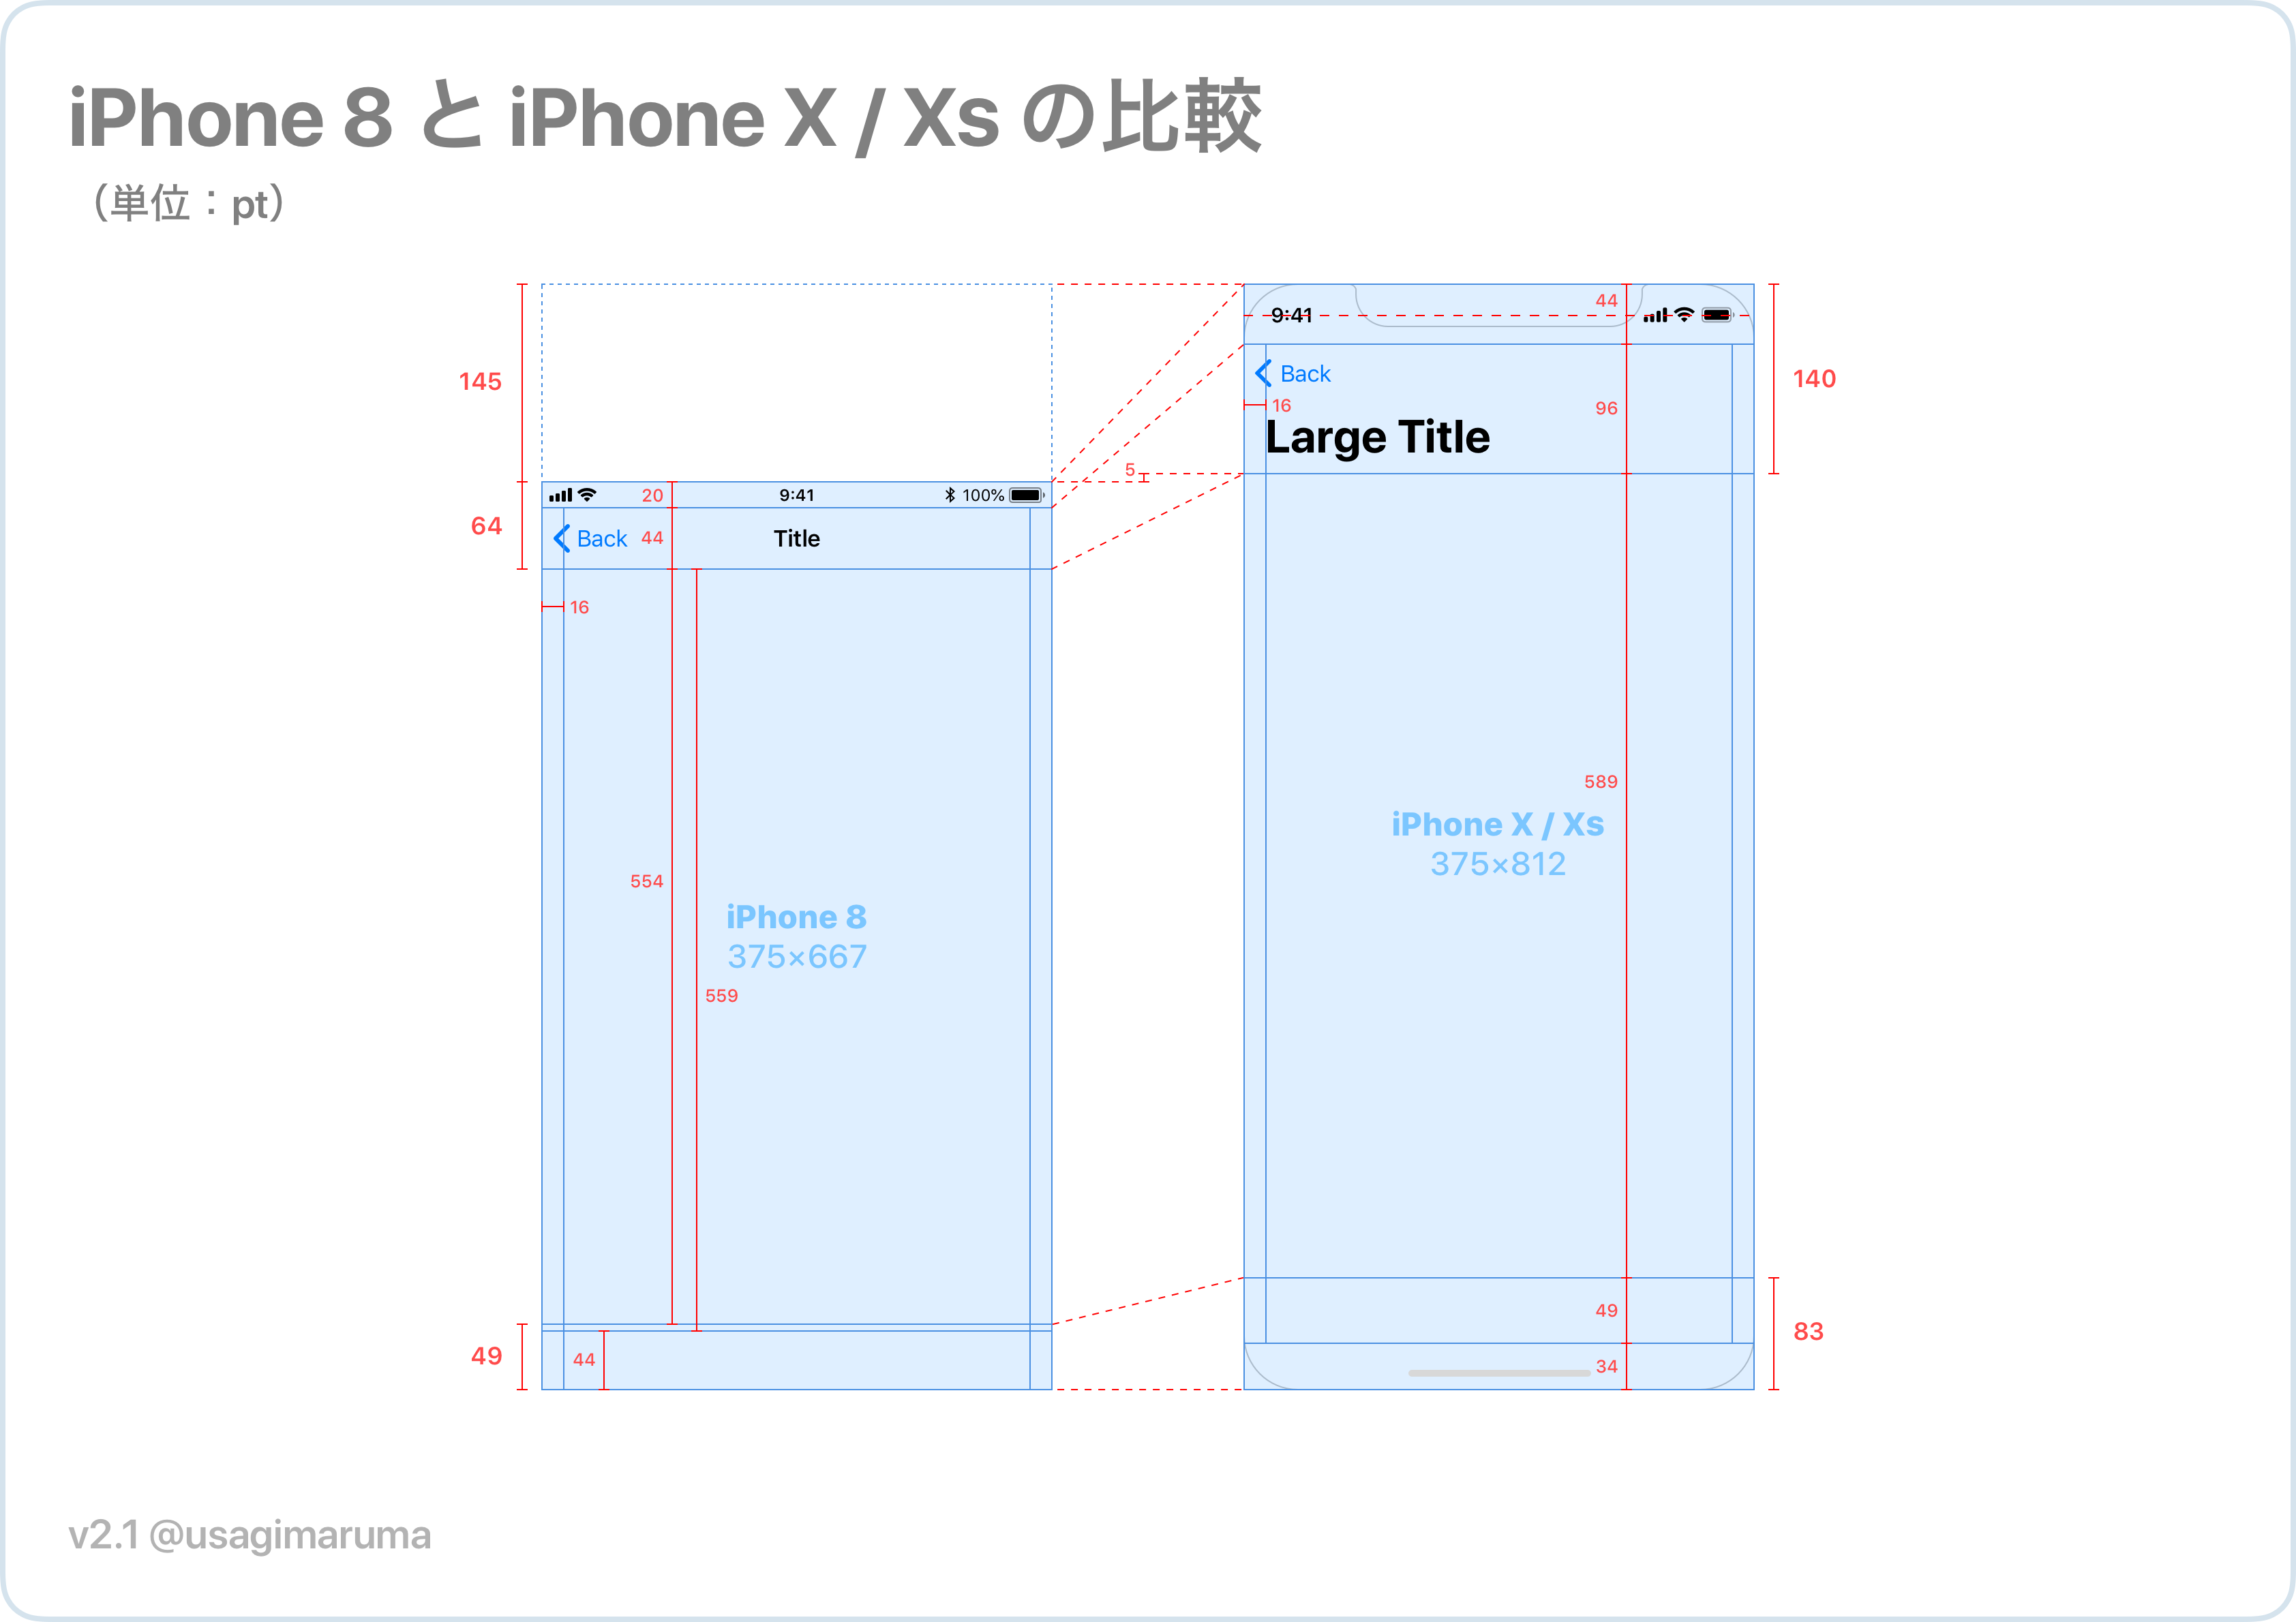 iPhone 8 vs. iPhone X, XS